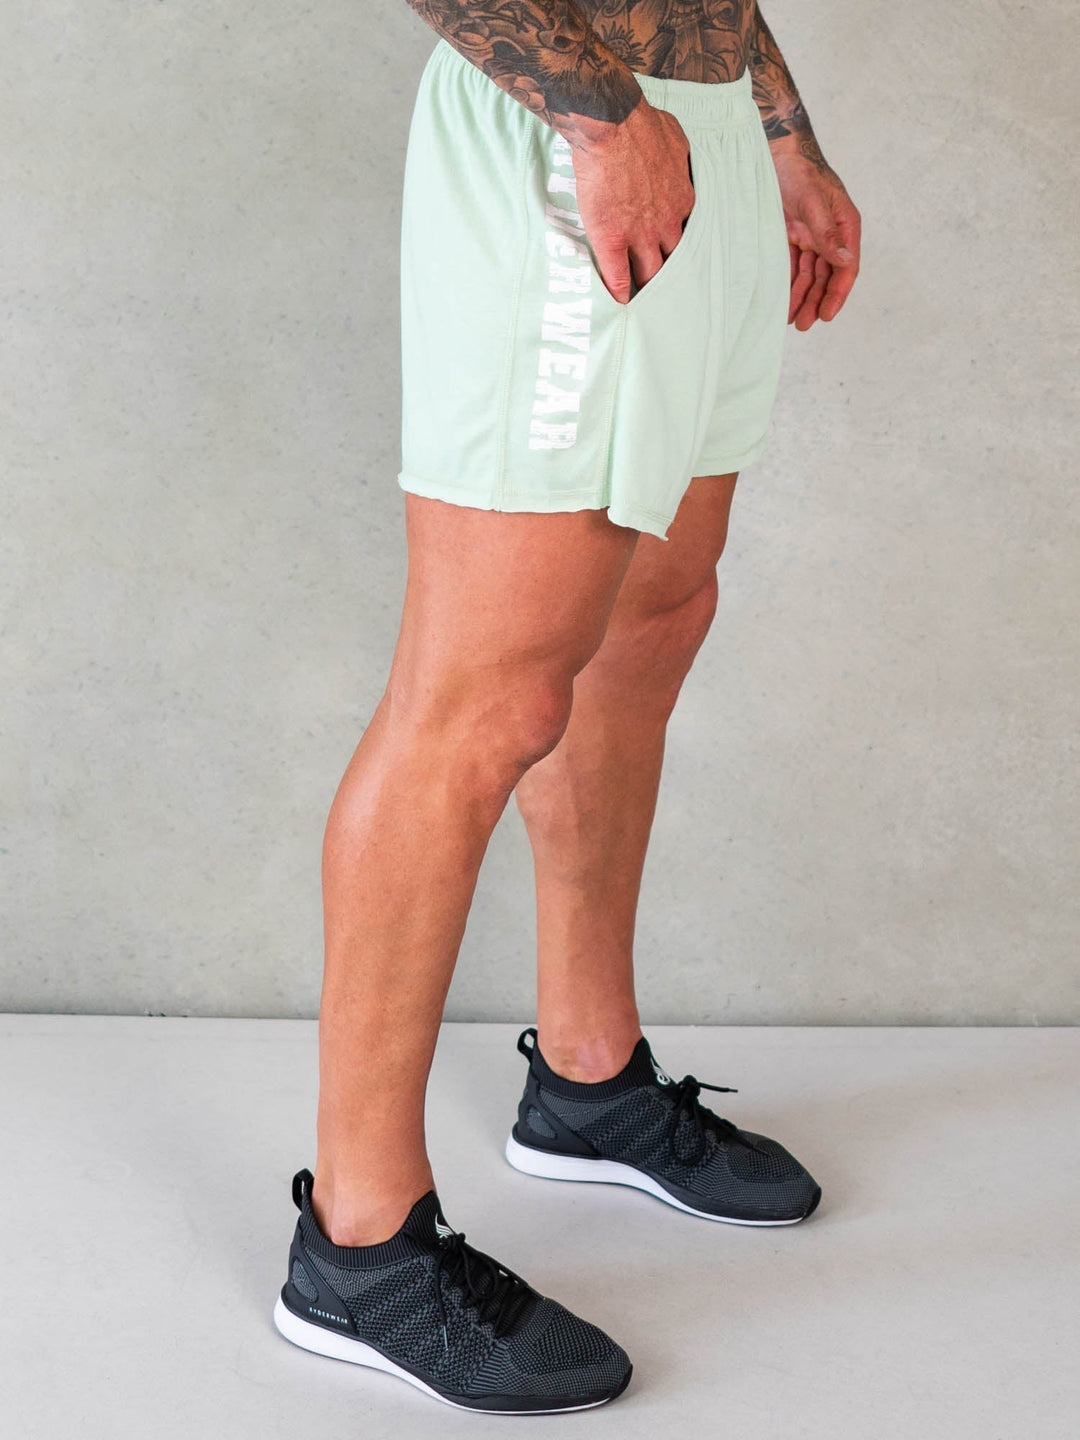 Octane Arnie Shorts - Mint Clothing Ryderwear 